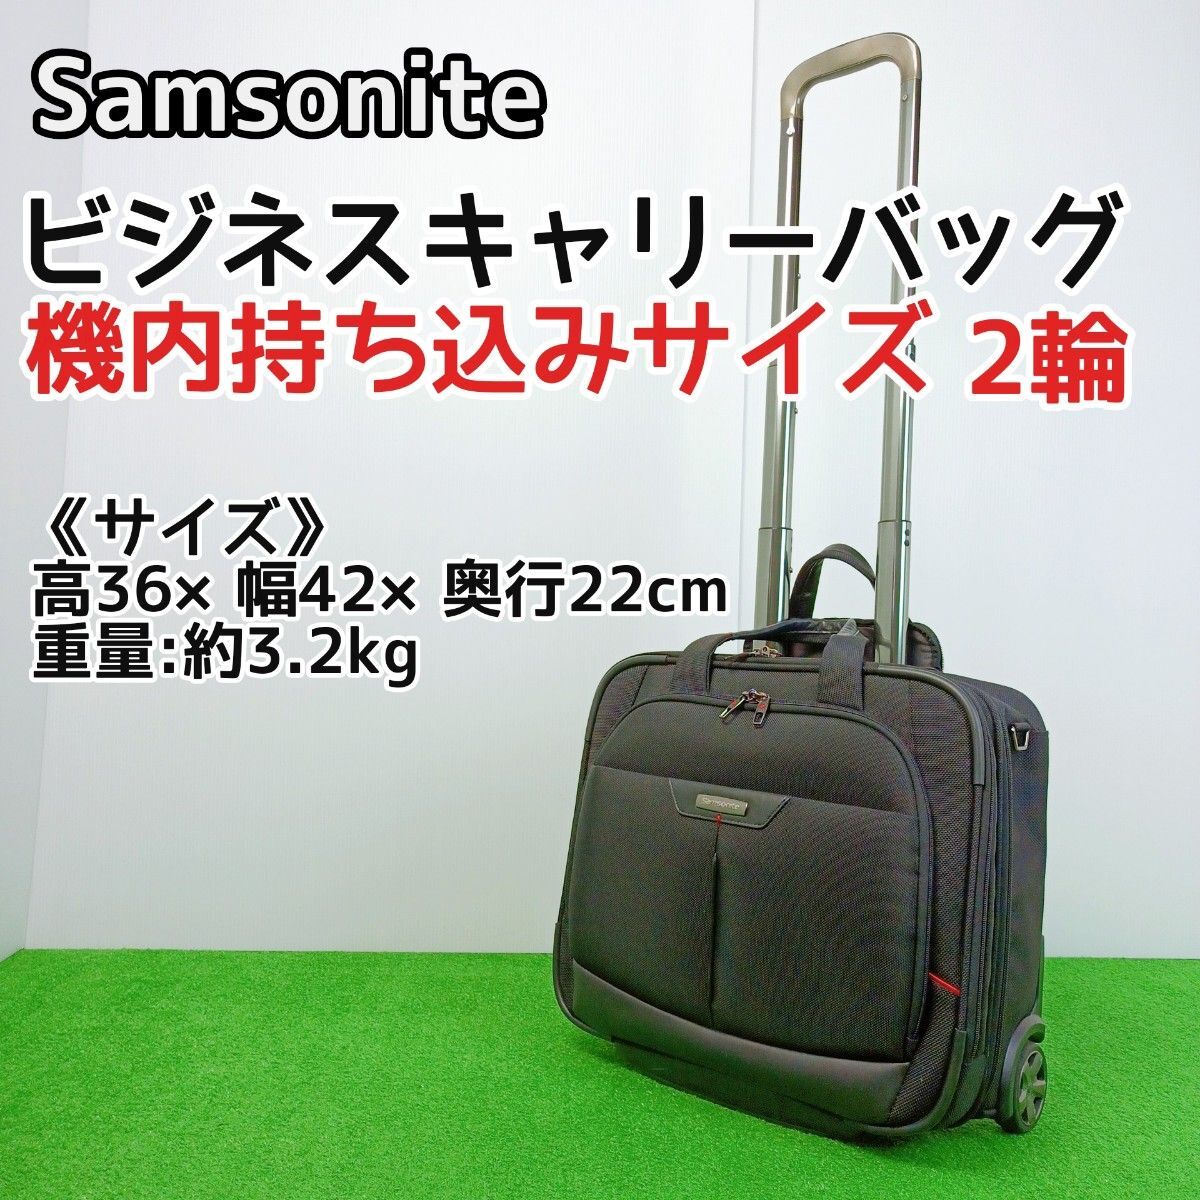 [ popular item ]Samsonite Samsonite business carry bag 2 wheel machine inside bringing in size Y24031901